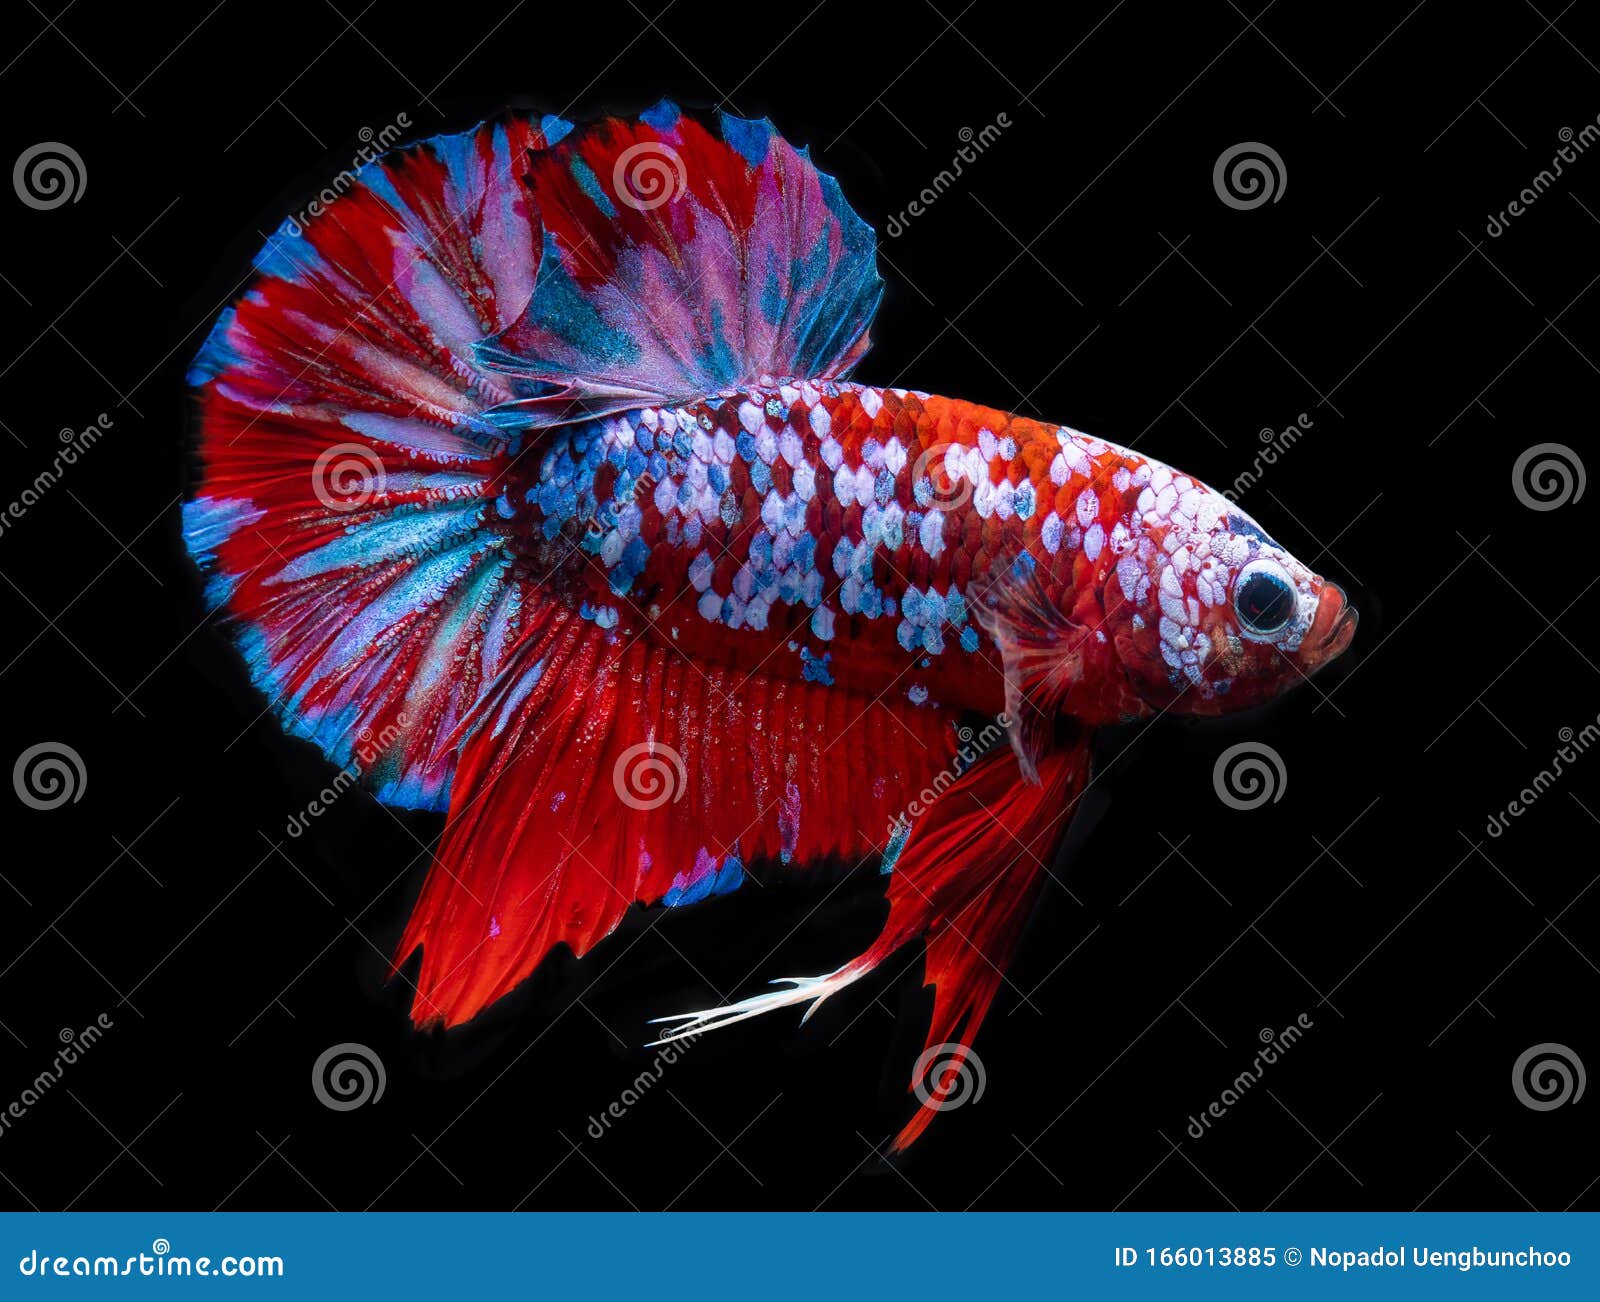 Fancy Koi Galaxy Betta Fish Stock Image - Image of domestic, macro